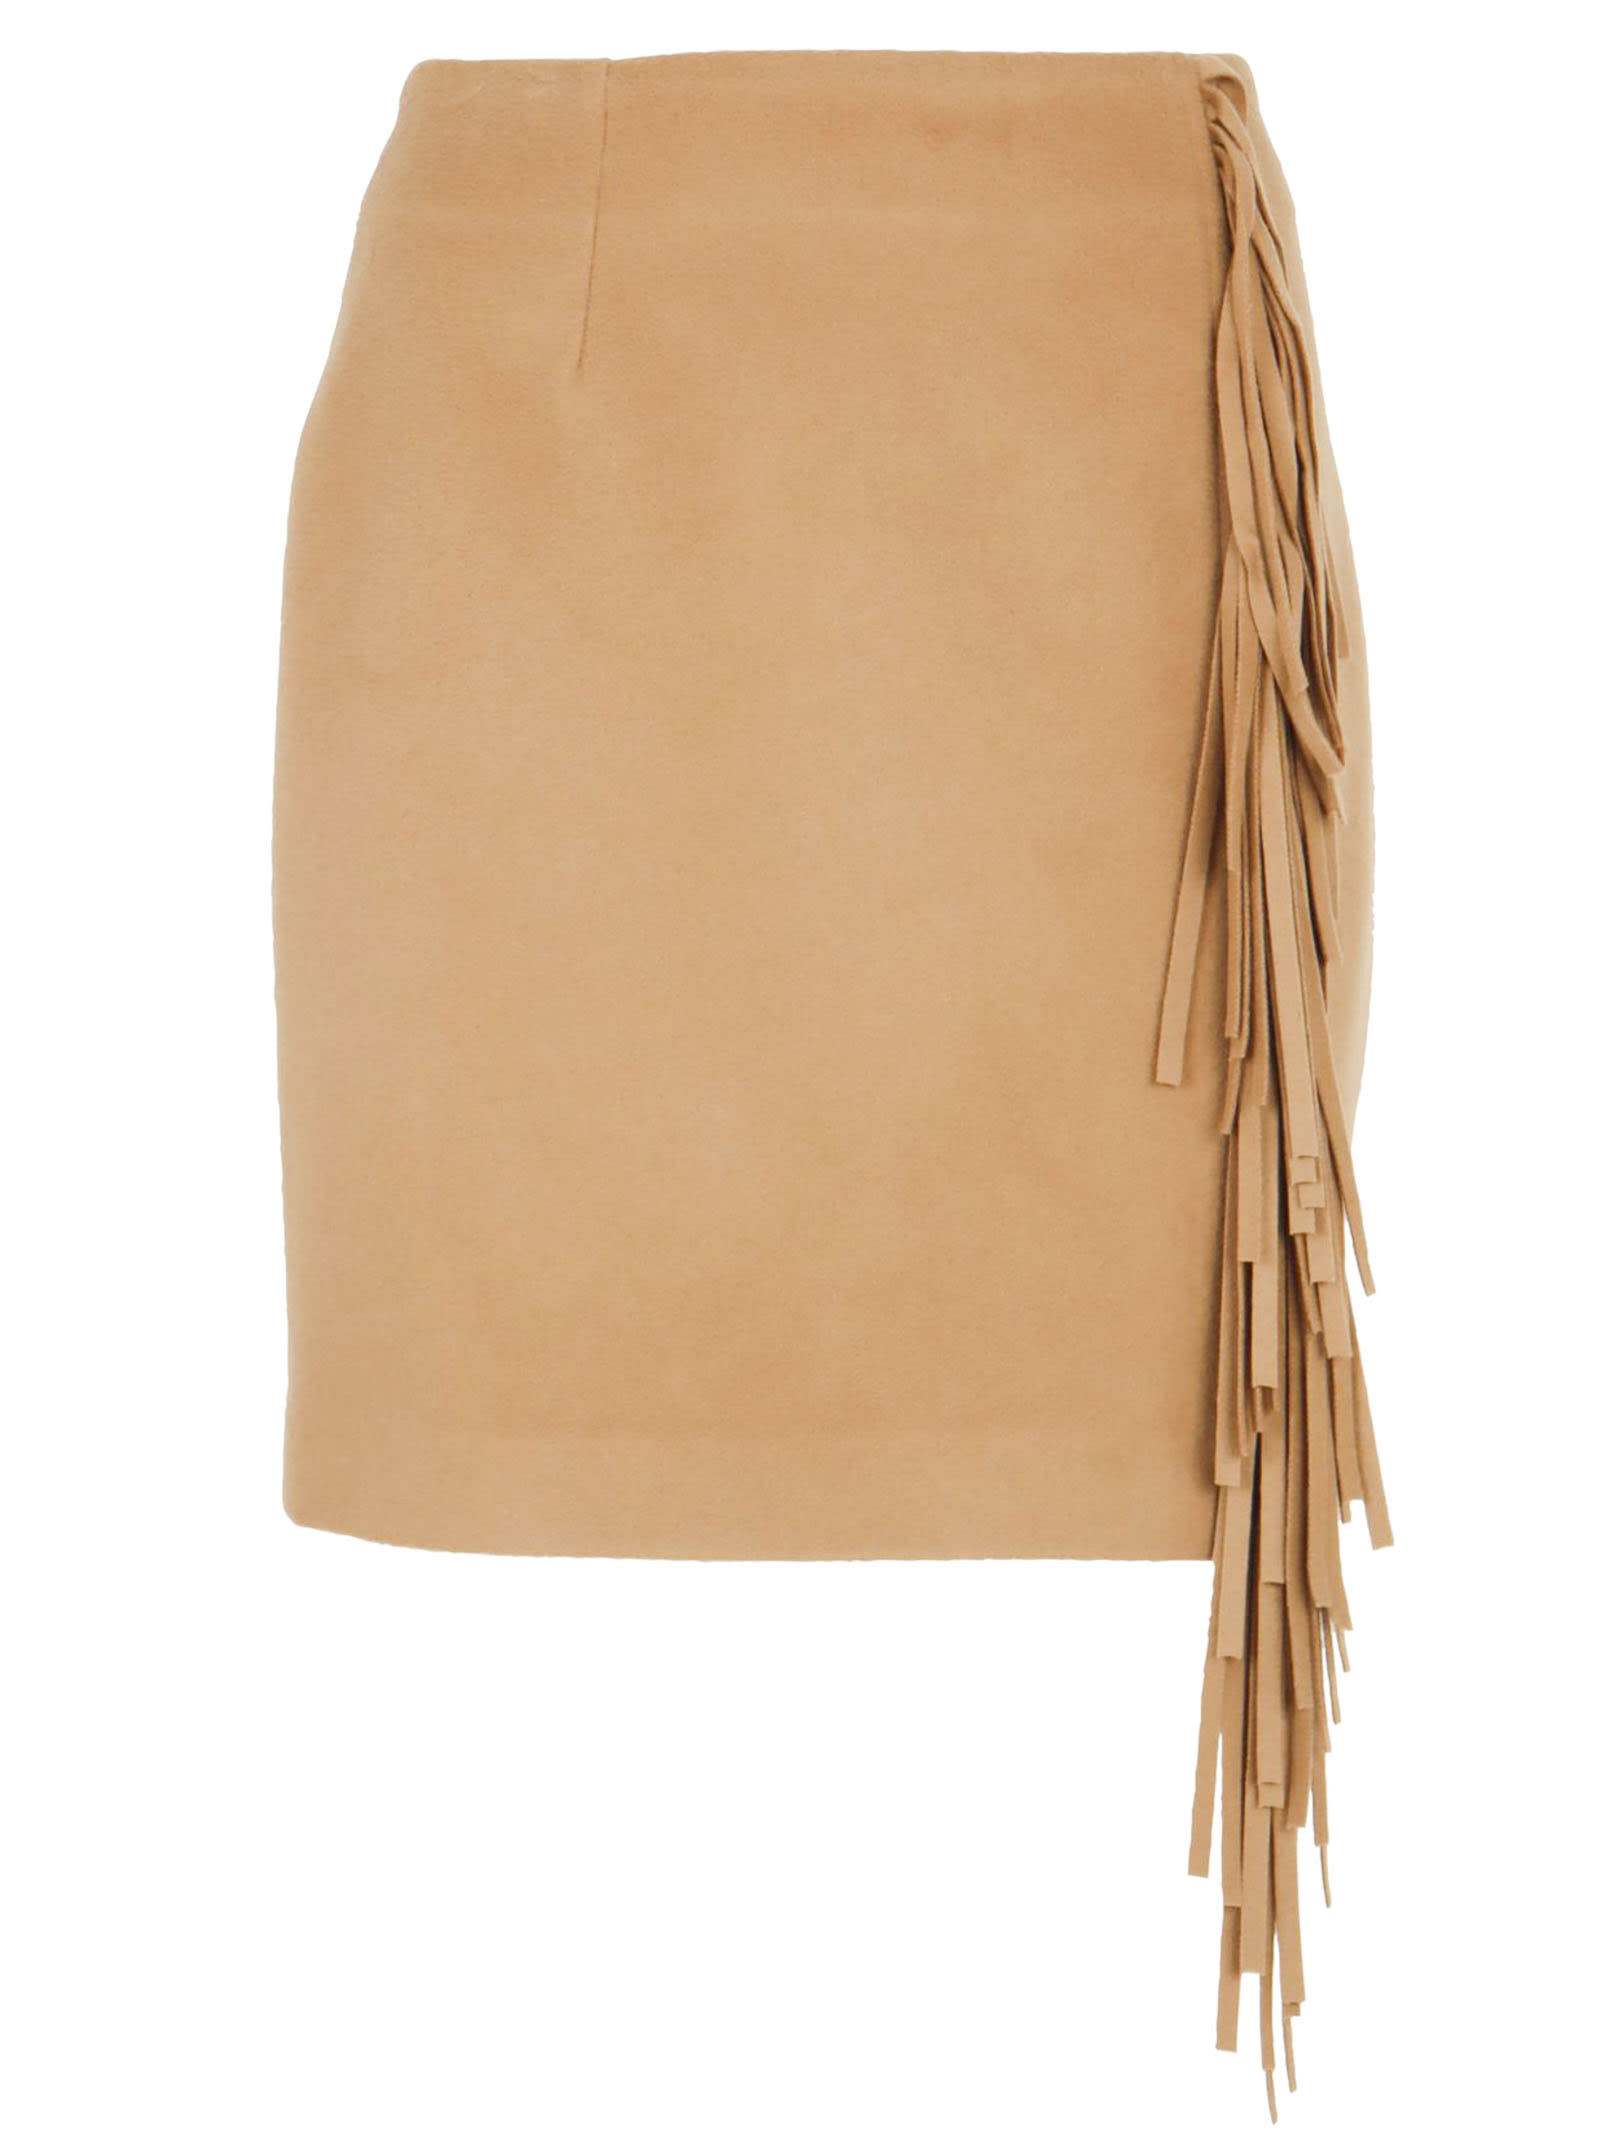 Federica Tosi Brown Wool And Cashmere Mini Skirt